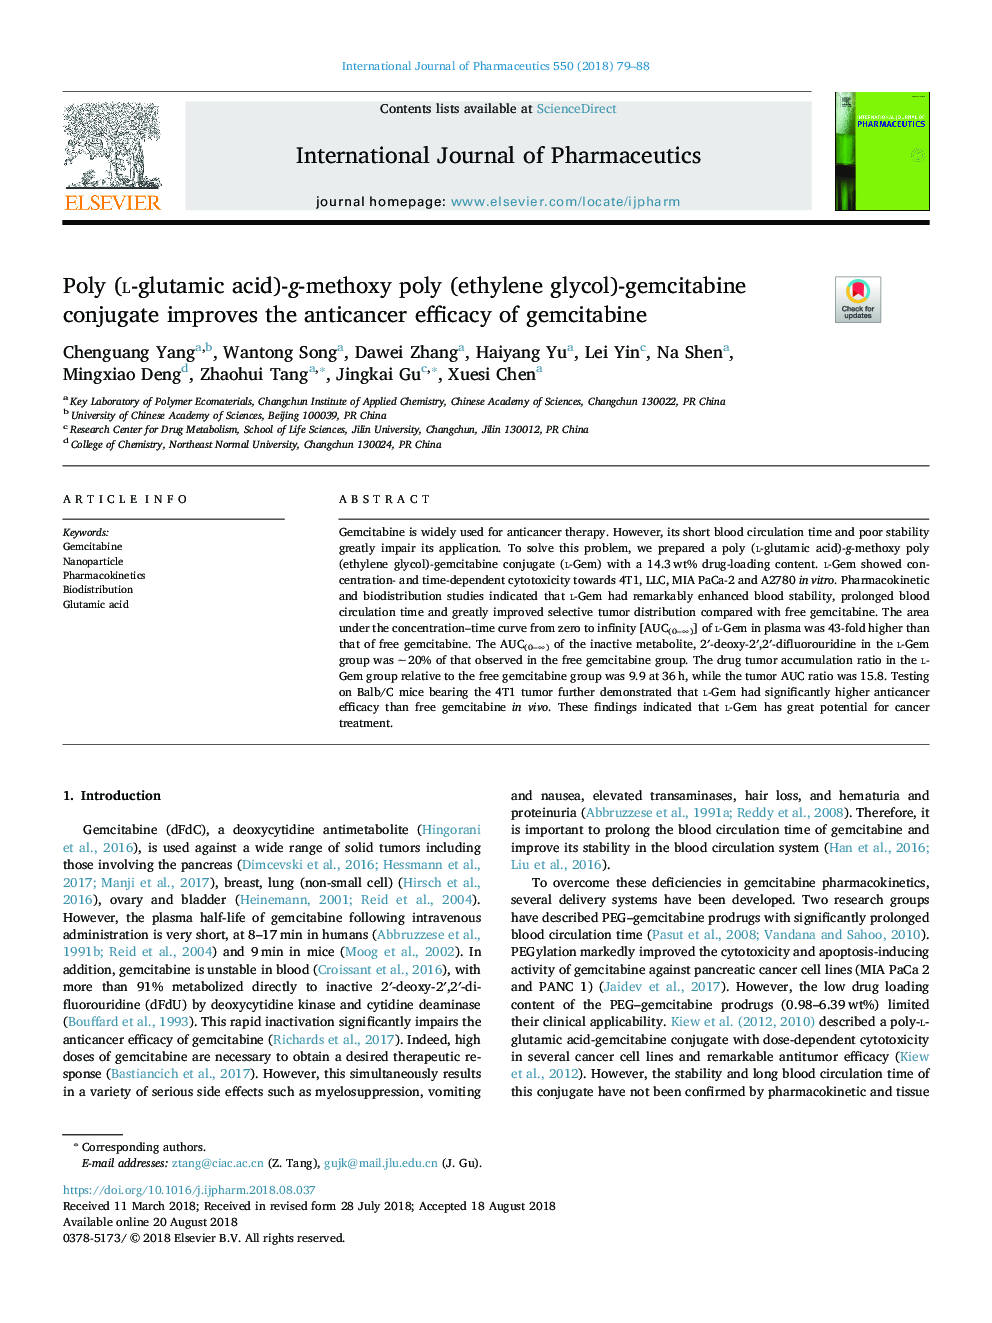 Poly (l-glutamic acid)-g-methoxy poly (ethylene glycol)-gemcitabine conjugate improves the anticancer efficacy of gemcitabine